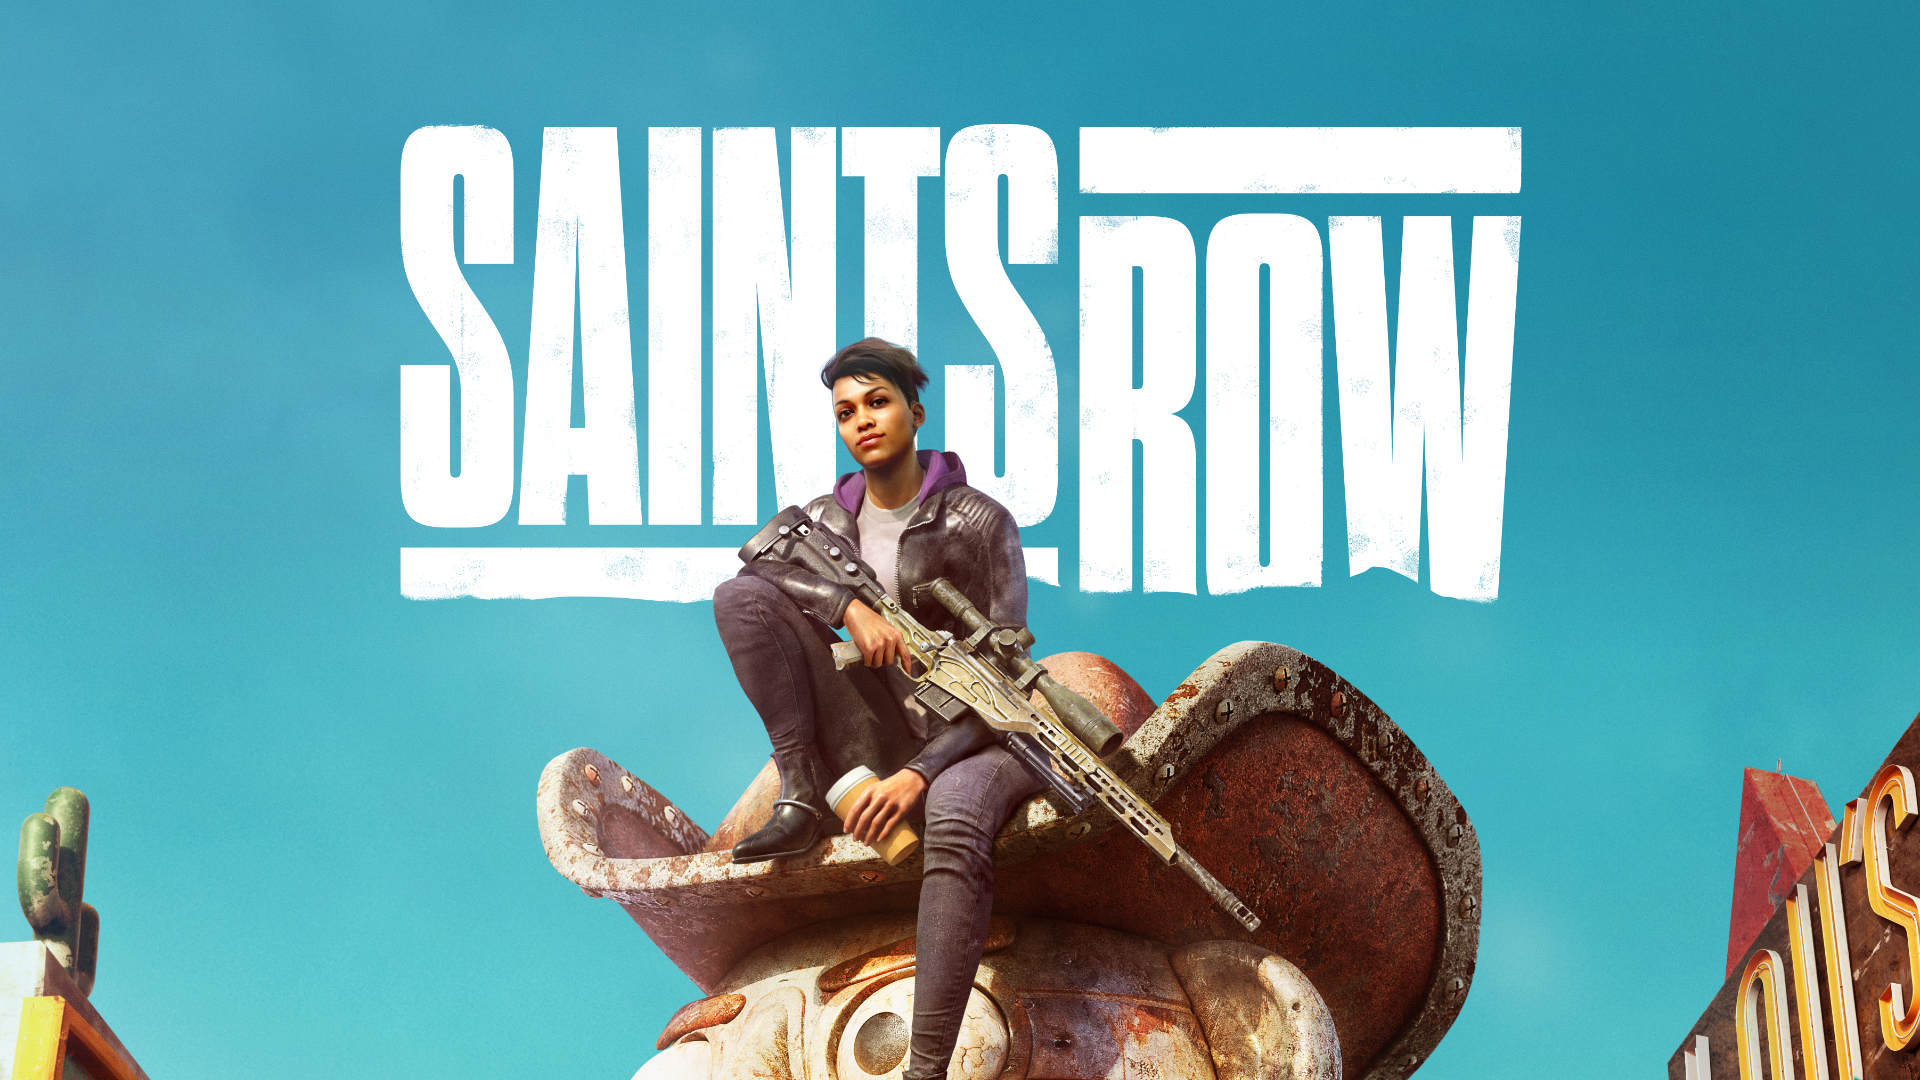 epic games saint row download